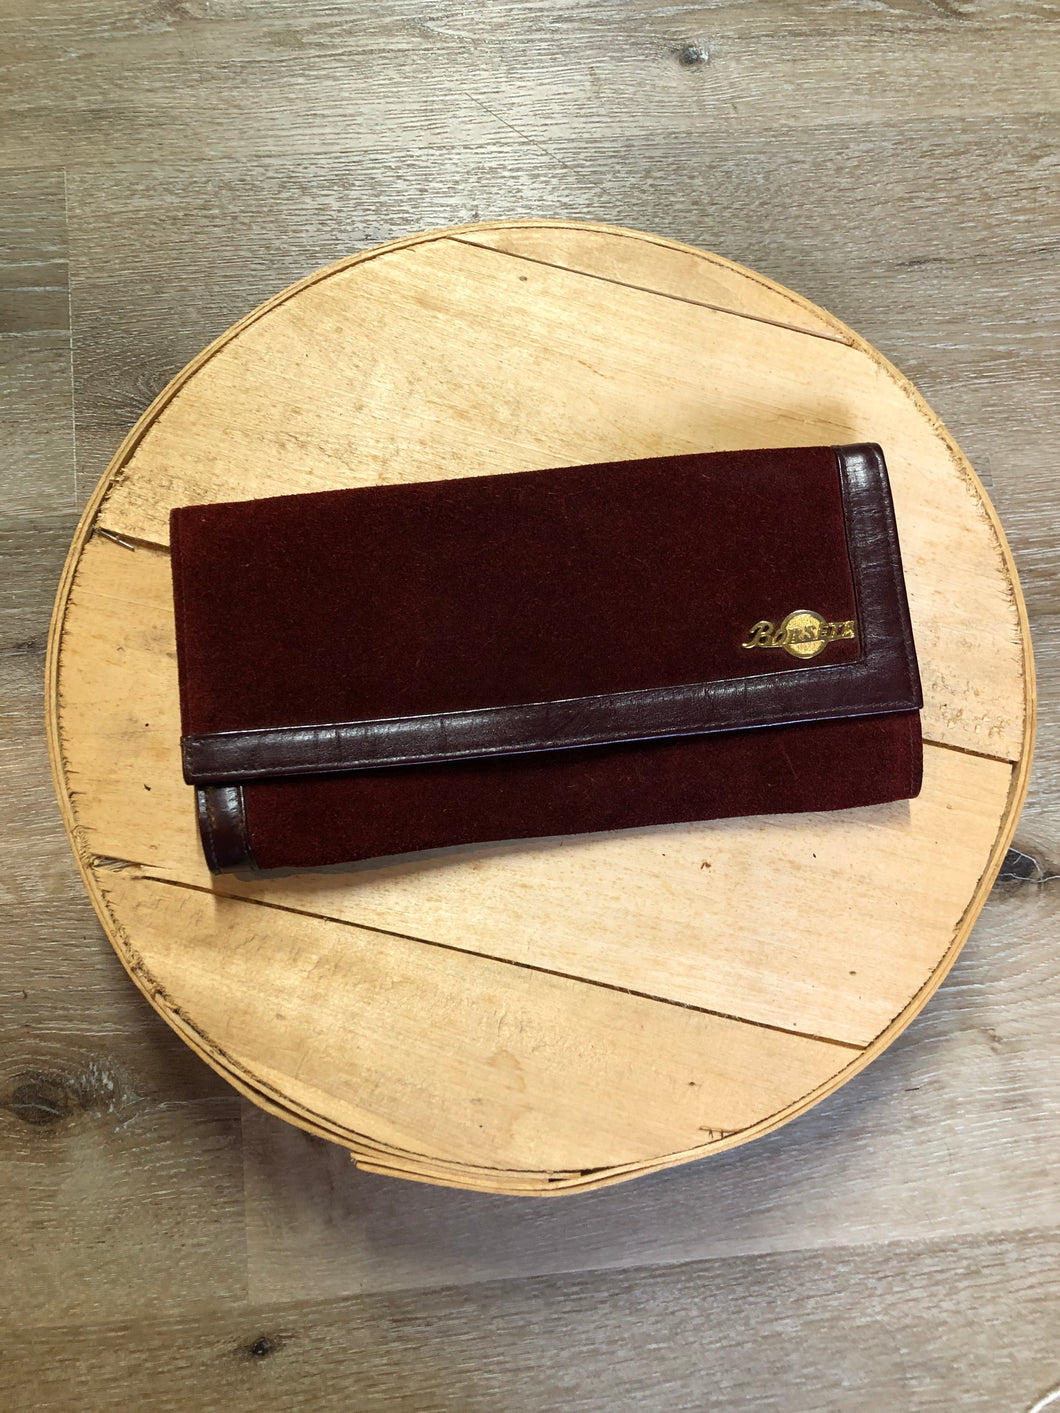 Kingspier Vintage - Borseta suede clutch in maroon with inside zip pocket.